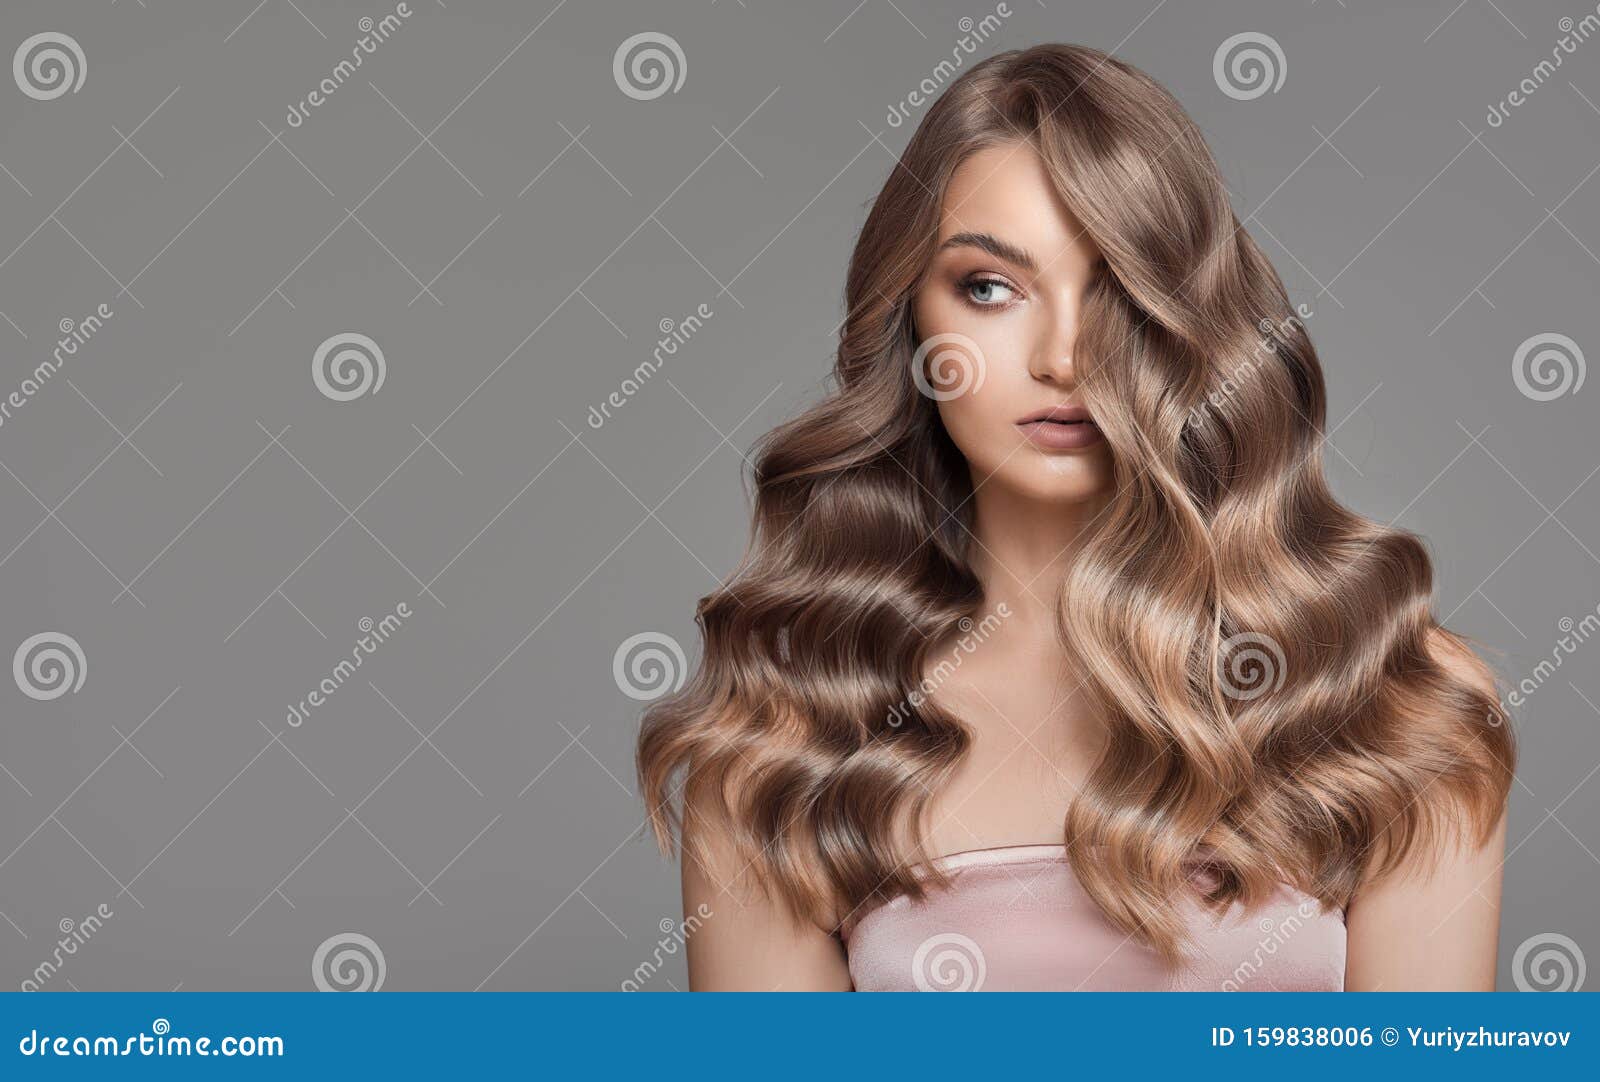 Woman With Beautiful Natural Long Wavy Blonde Hair Stock